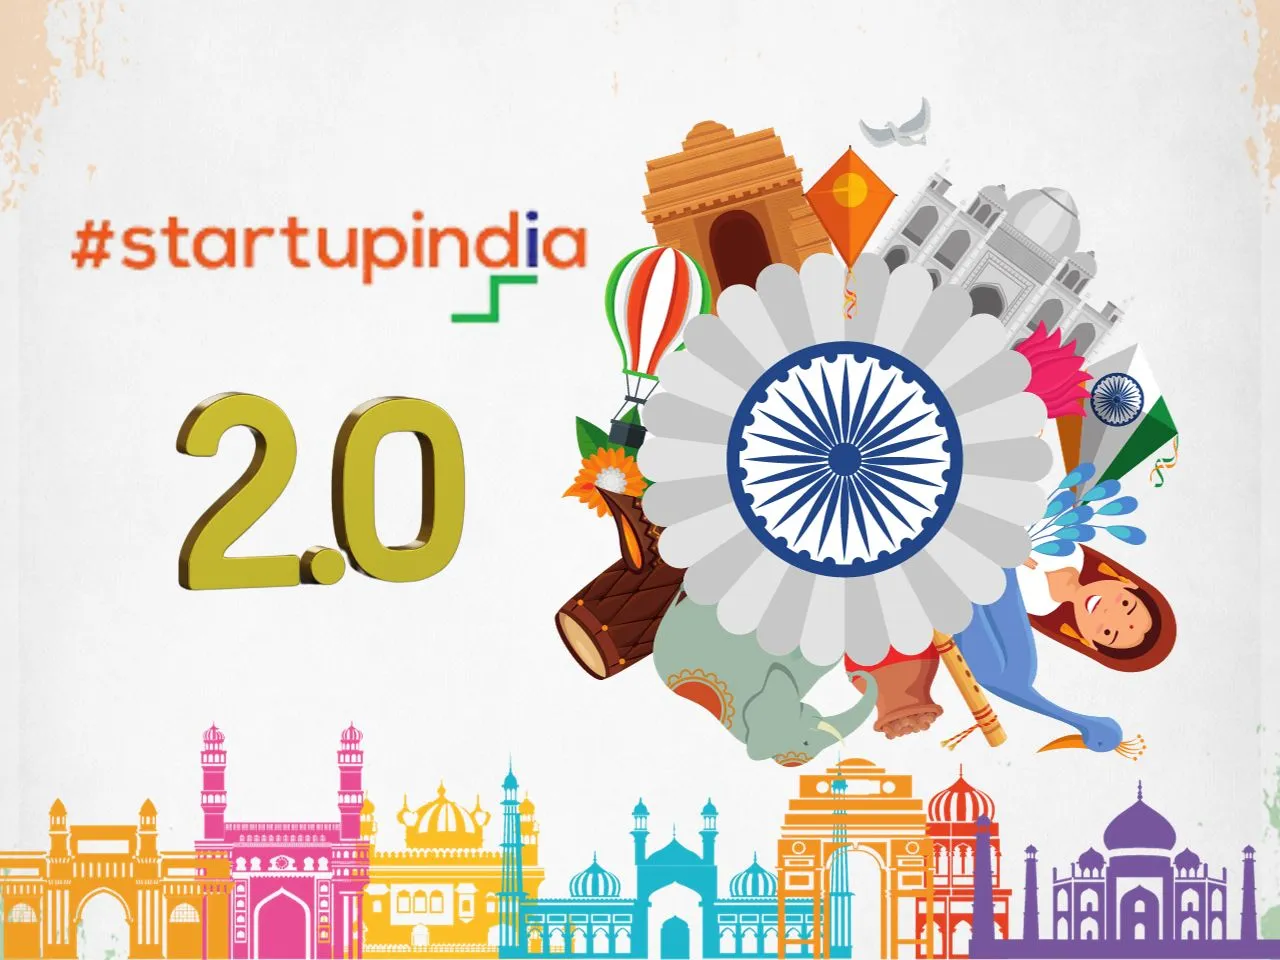 Startup India 2.0